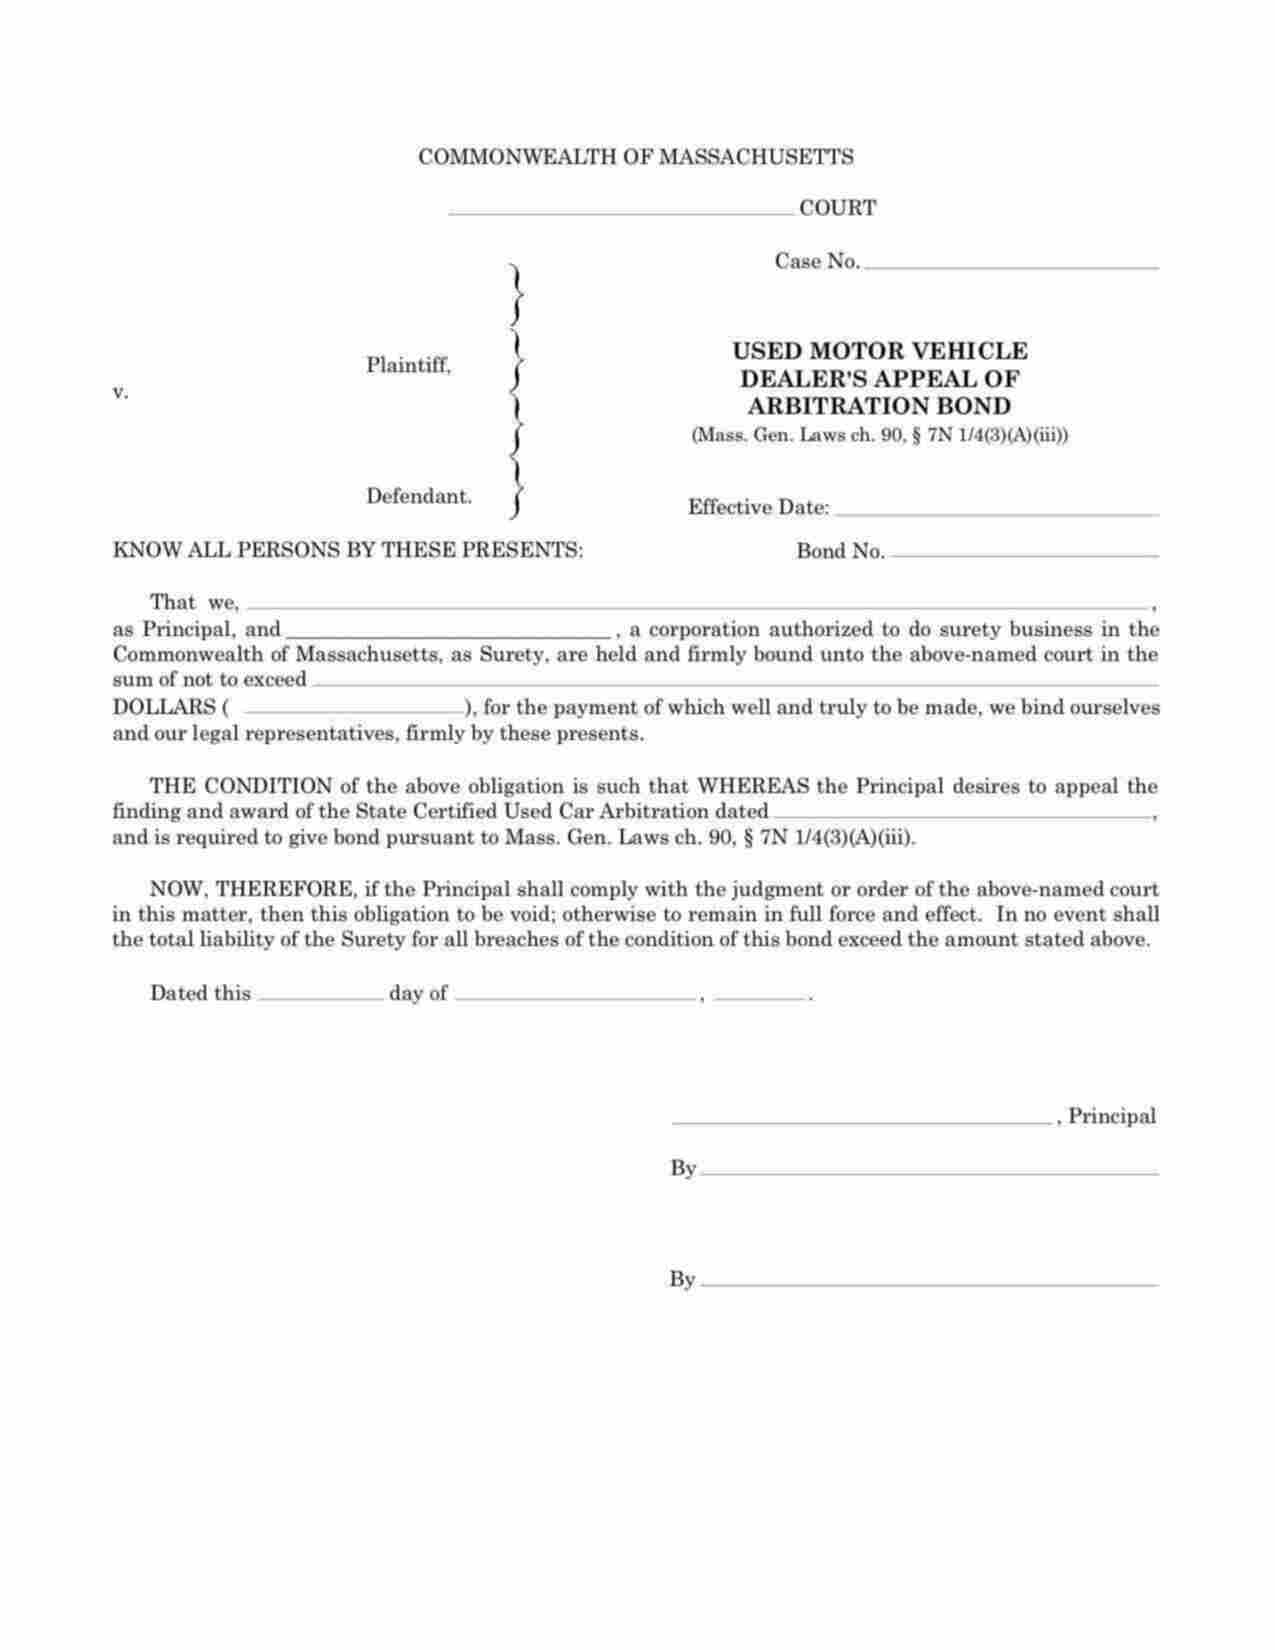 Massachusetts Appeal of Arbitration - Used Motor Vehicle Dealer Bond Form